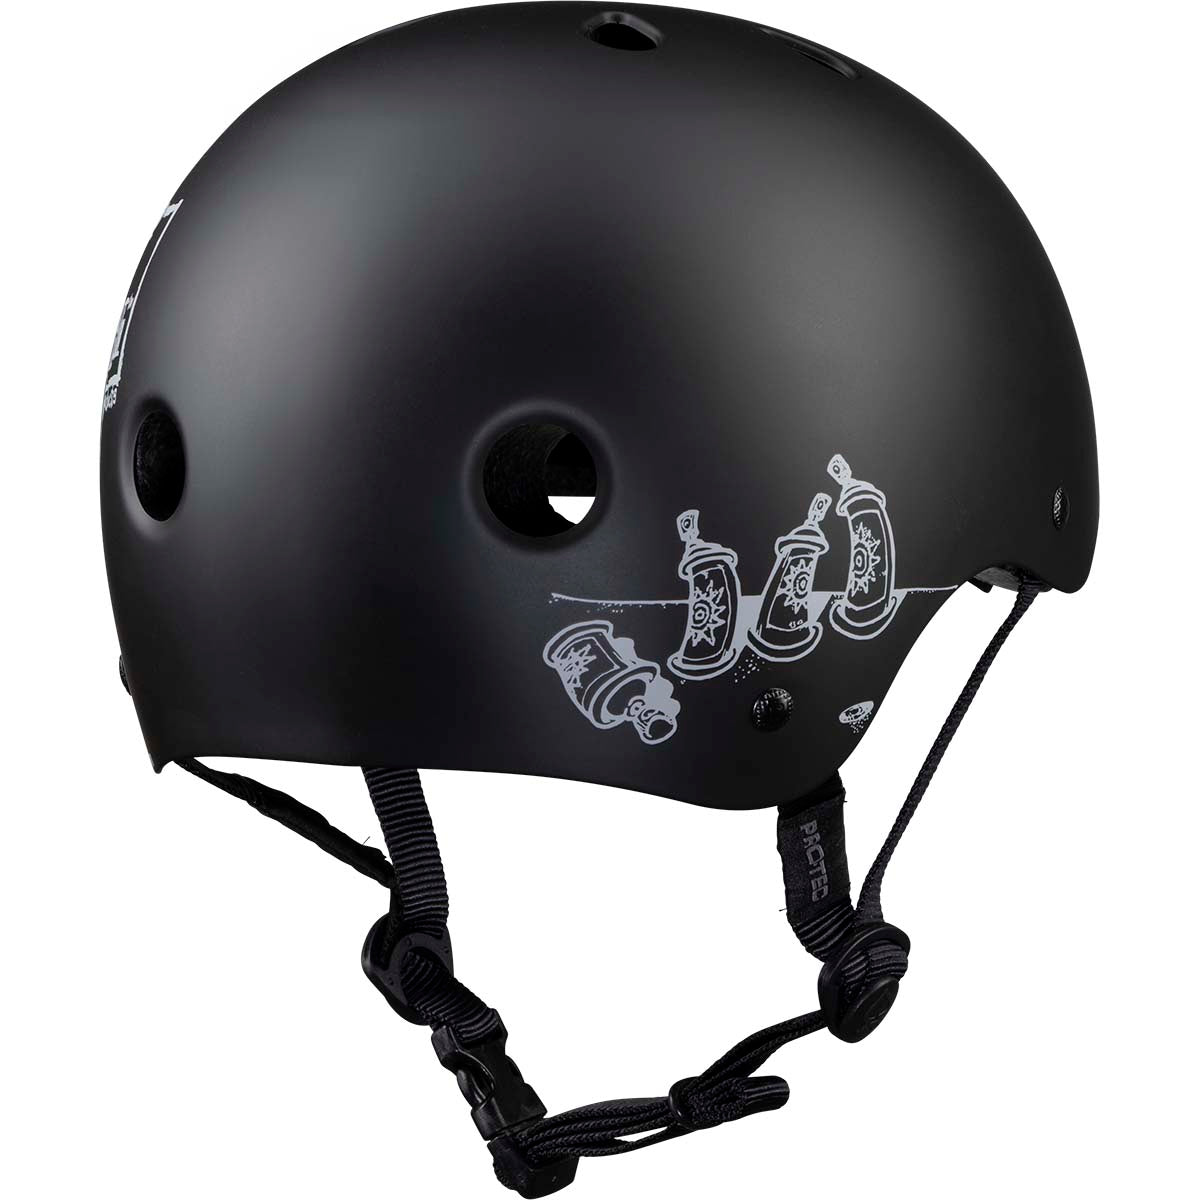 Pro-Tec x New Deal Spray Classic Certified Helmet - Black image 3